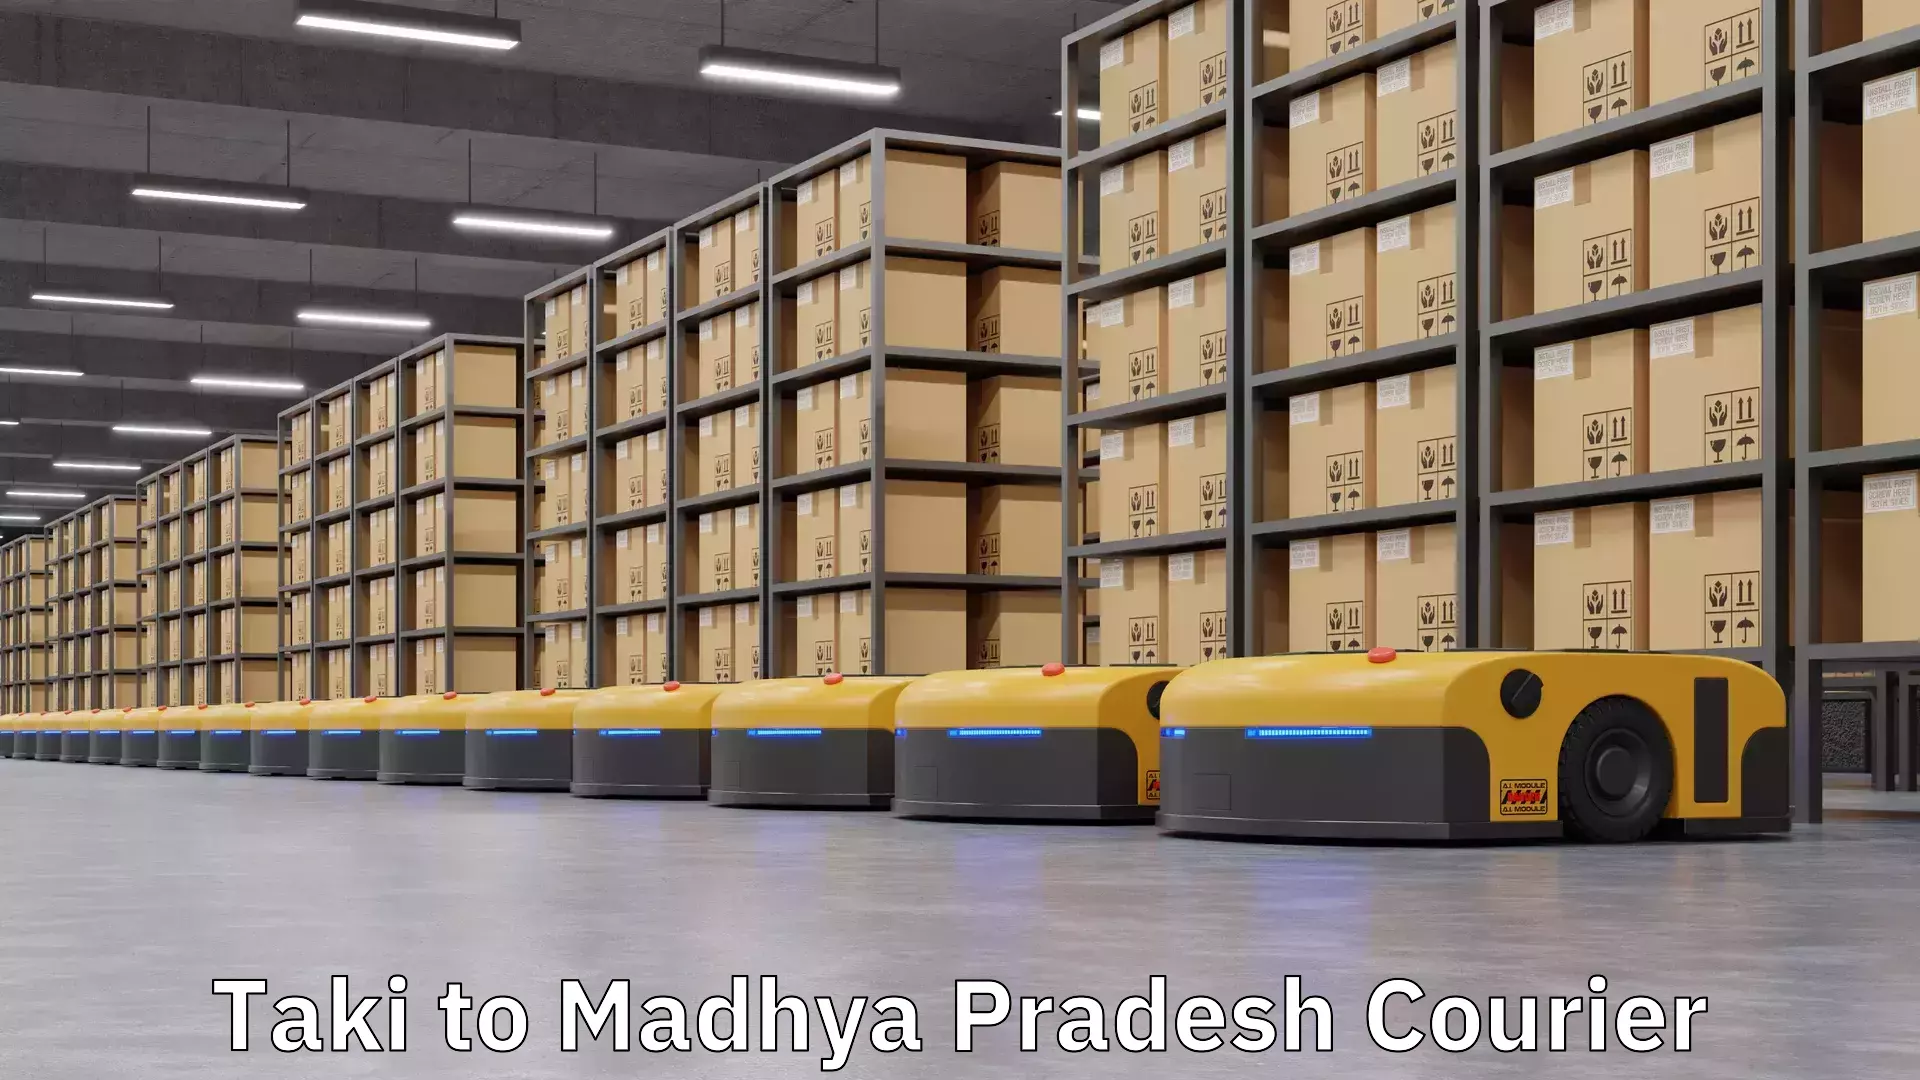 Personal parcel delivery Taki to Madhya Pradesh